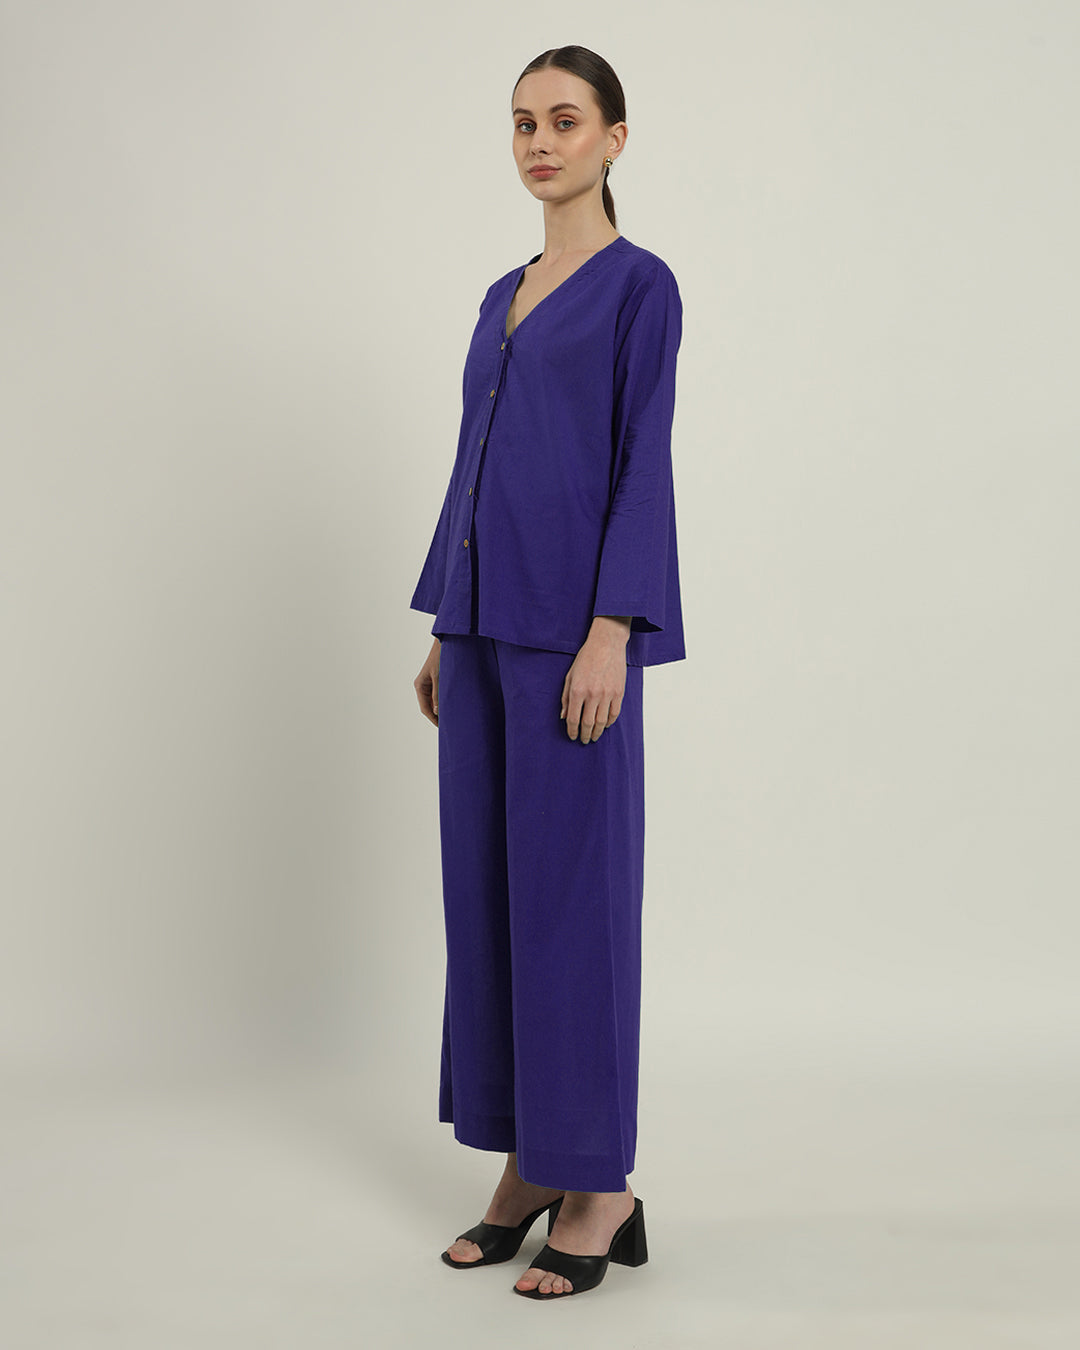 Aurora Purple Classic Grace Shirt Solid Co-ord set